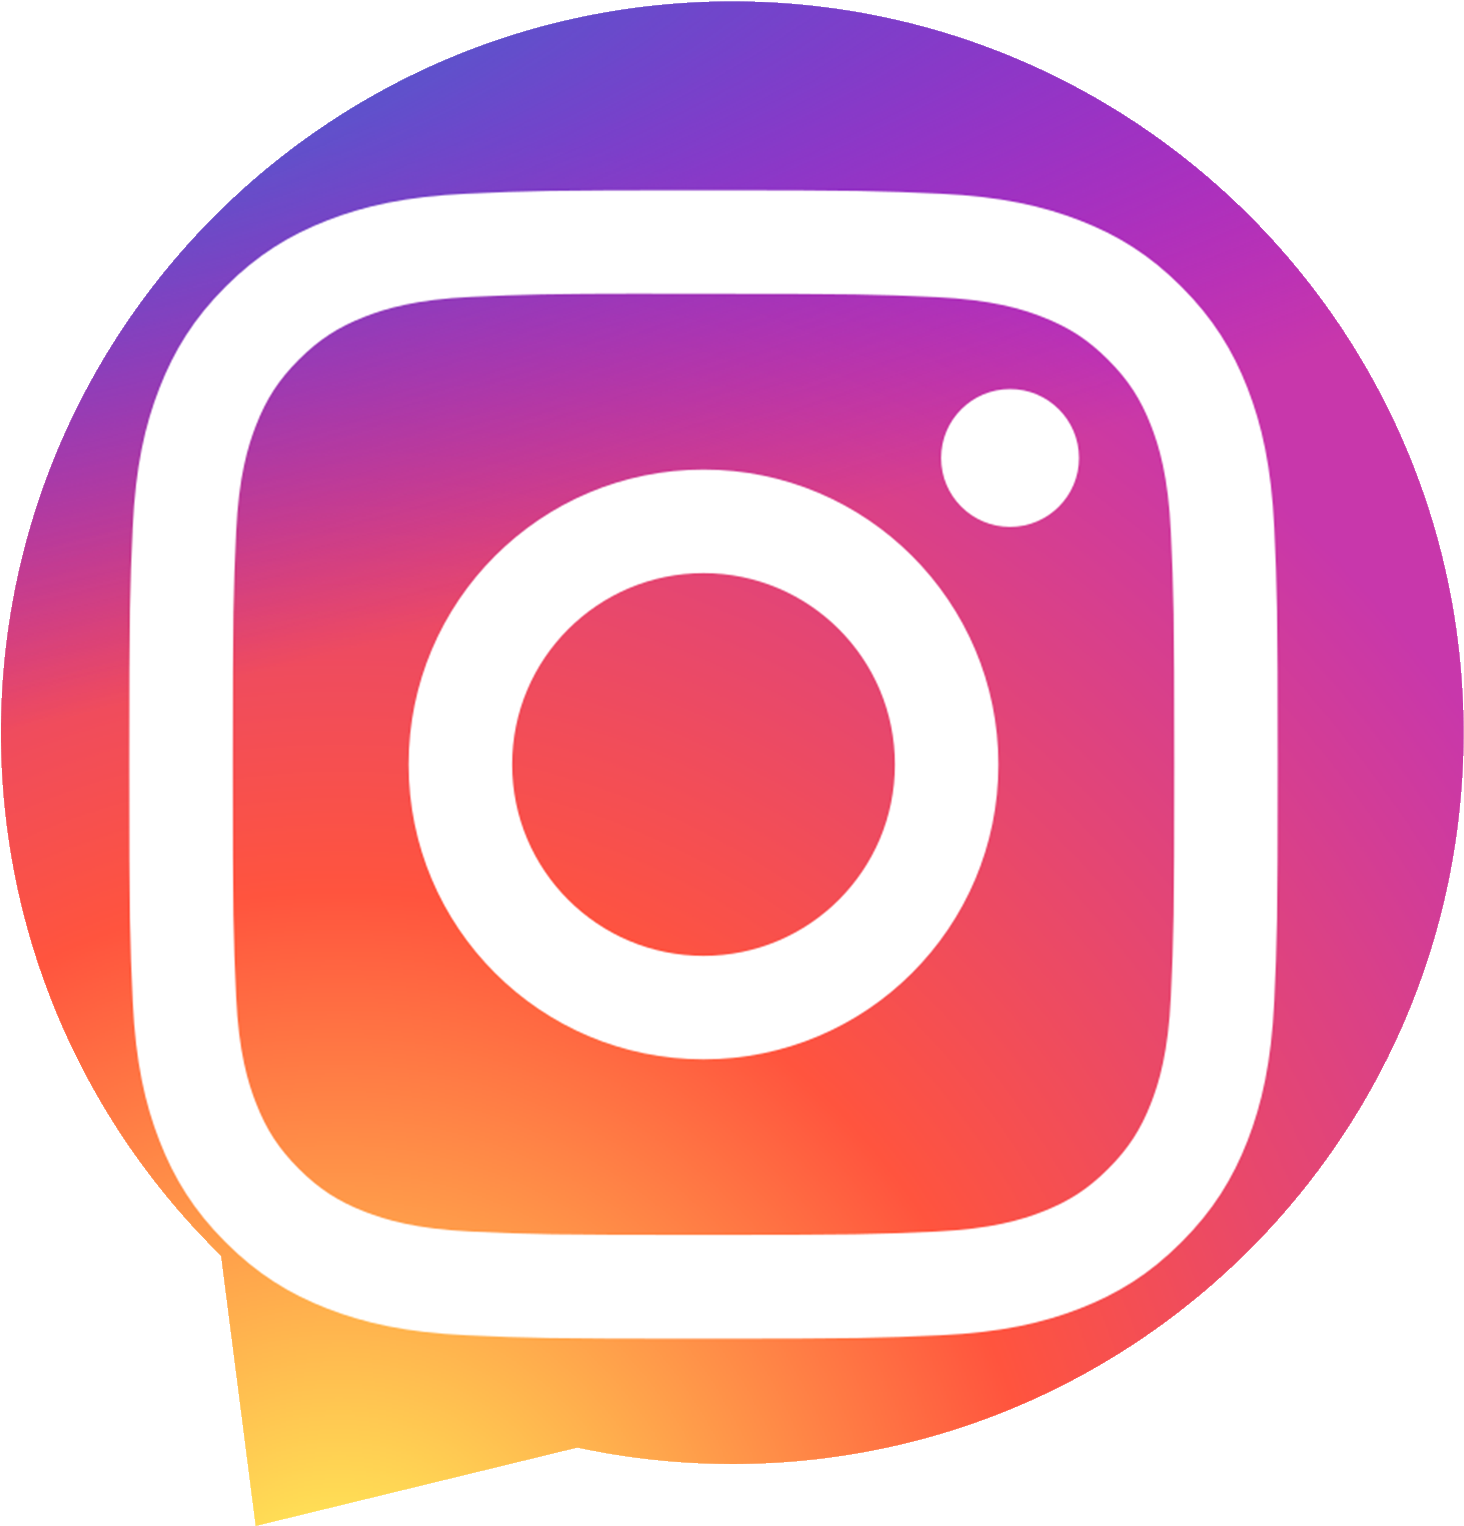 Older Posts - Instagram Logo Animated Gif (2000x2000)